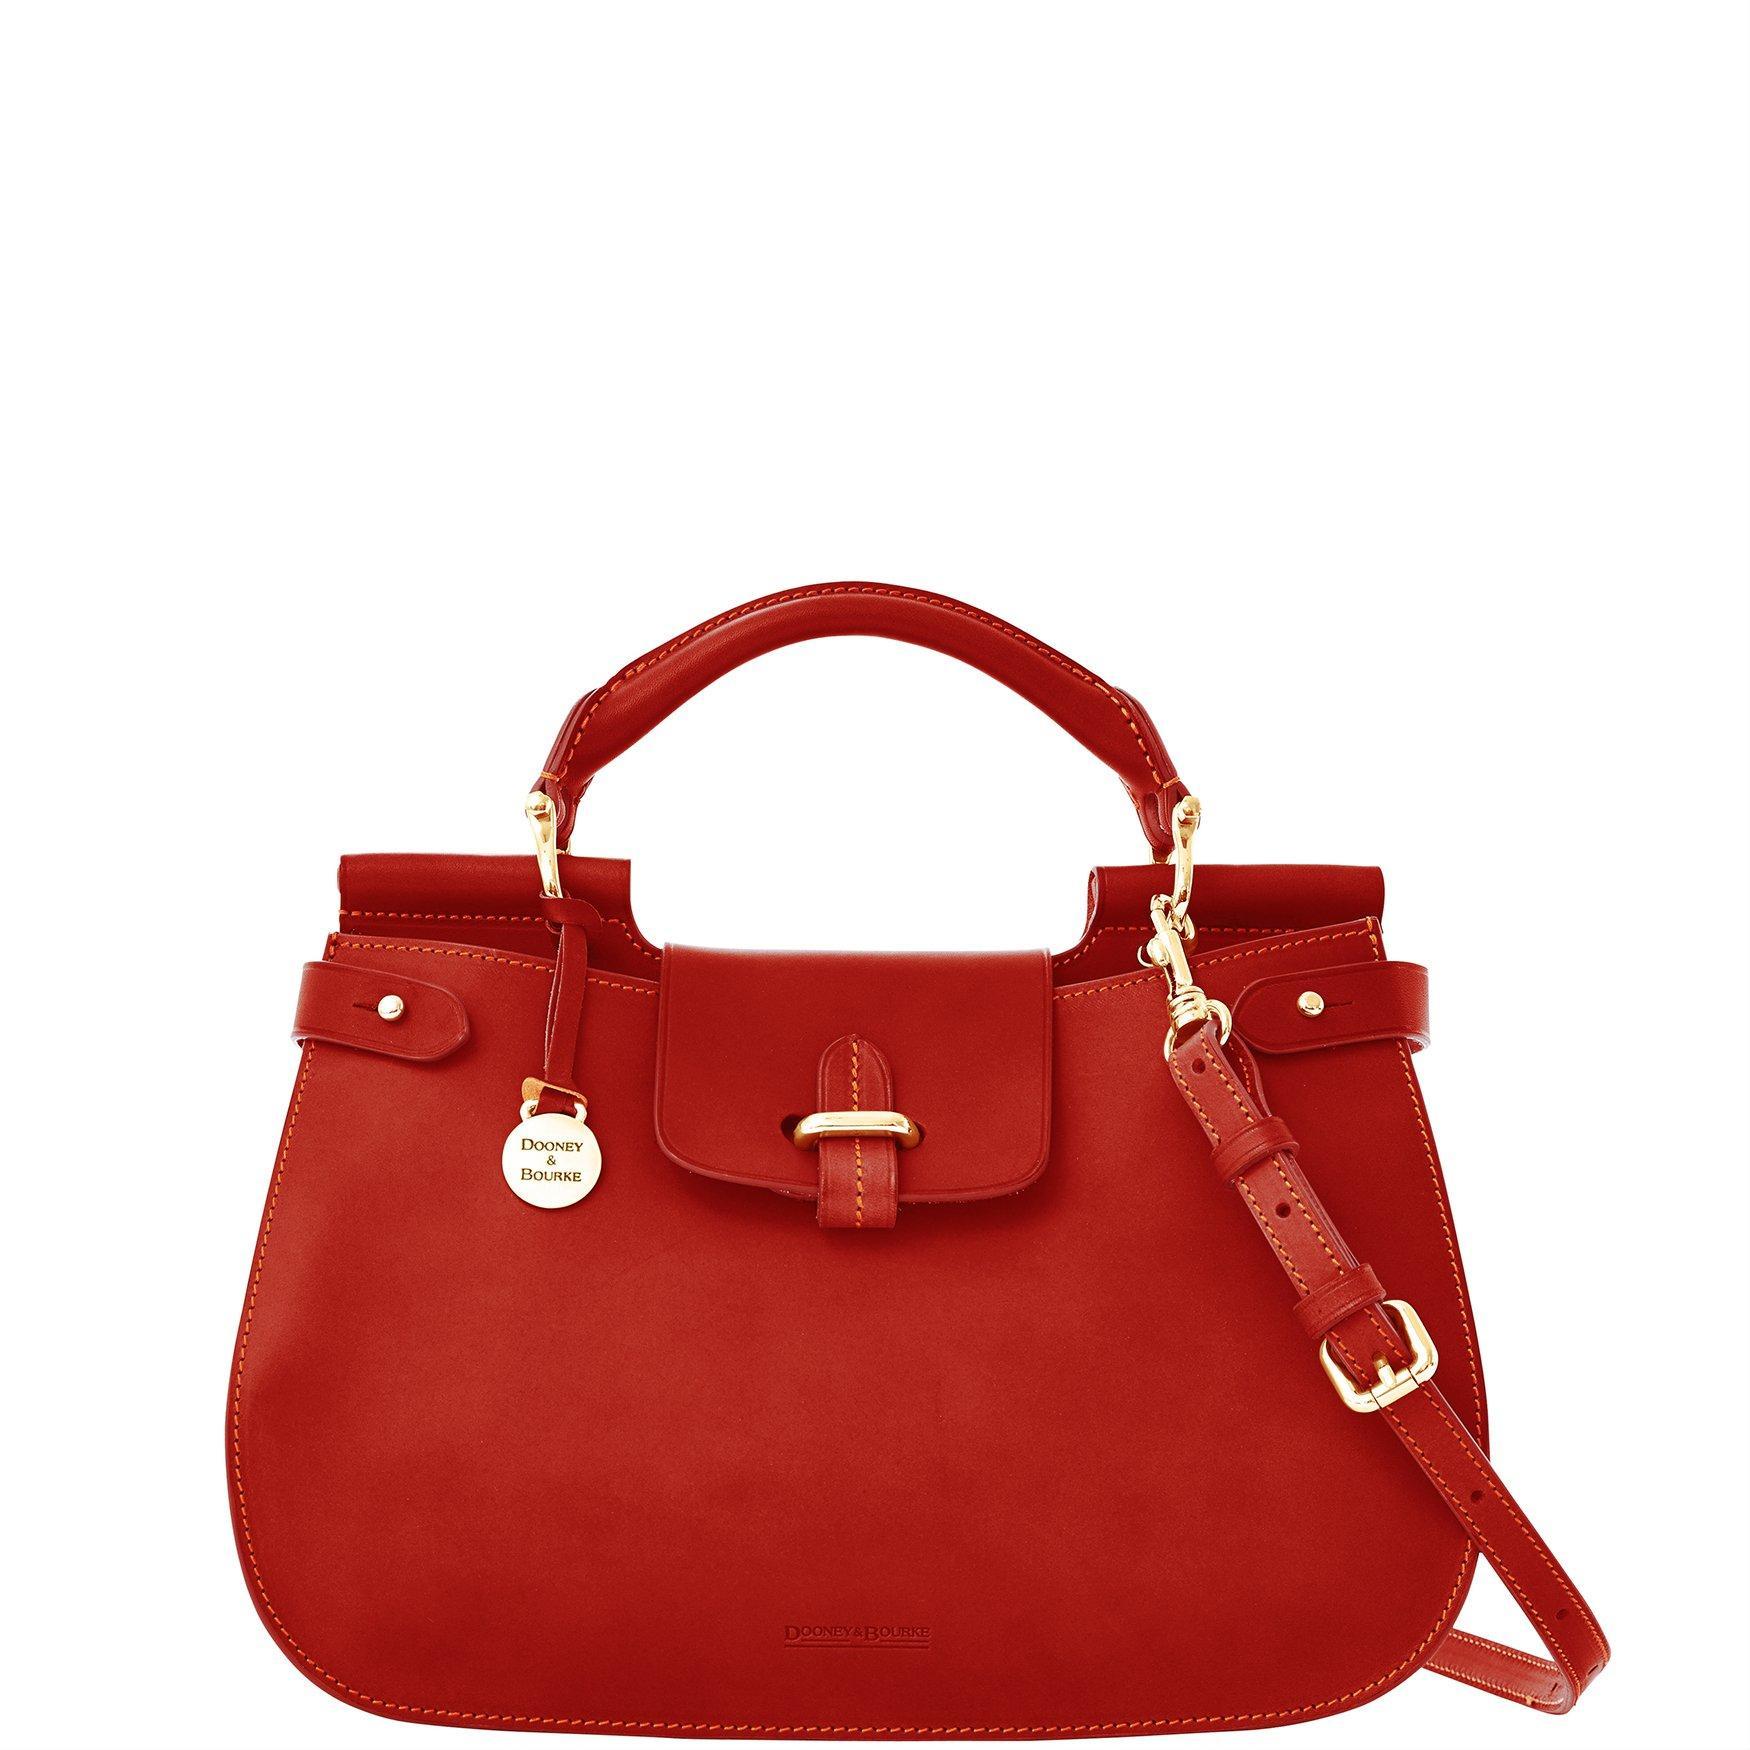 Dooney & Bourke Leather Alto Viola Bag in Red - Lyst